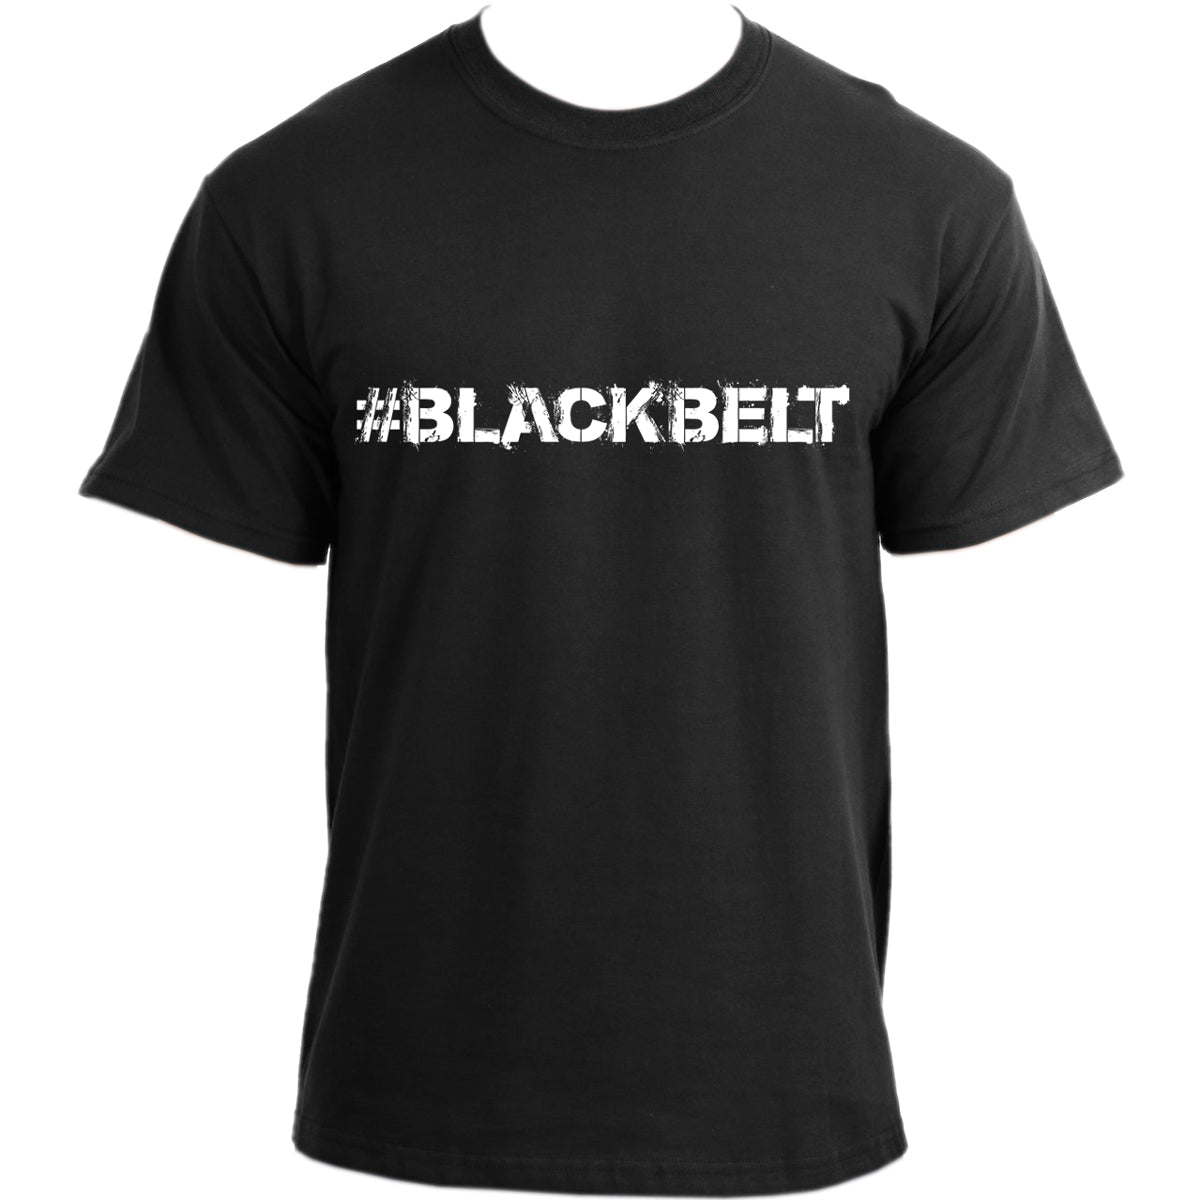 Blackbelt Martial Arts T shirt - Brazilian Jiu Jitsu #Blackbelt MMA UFC BJJ T-shirt For Men